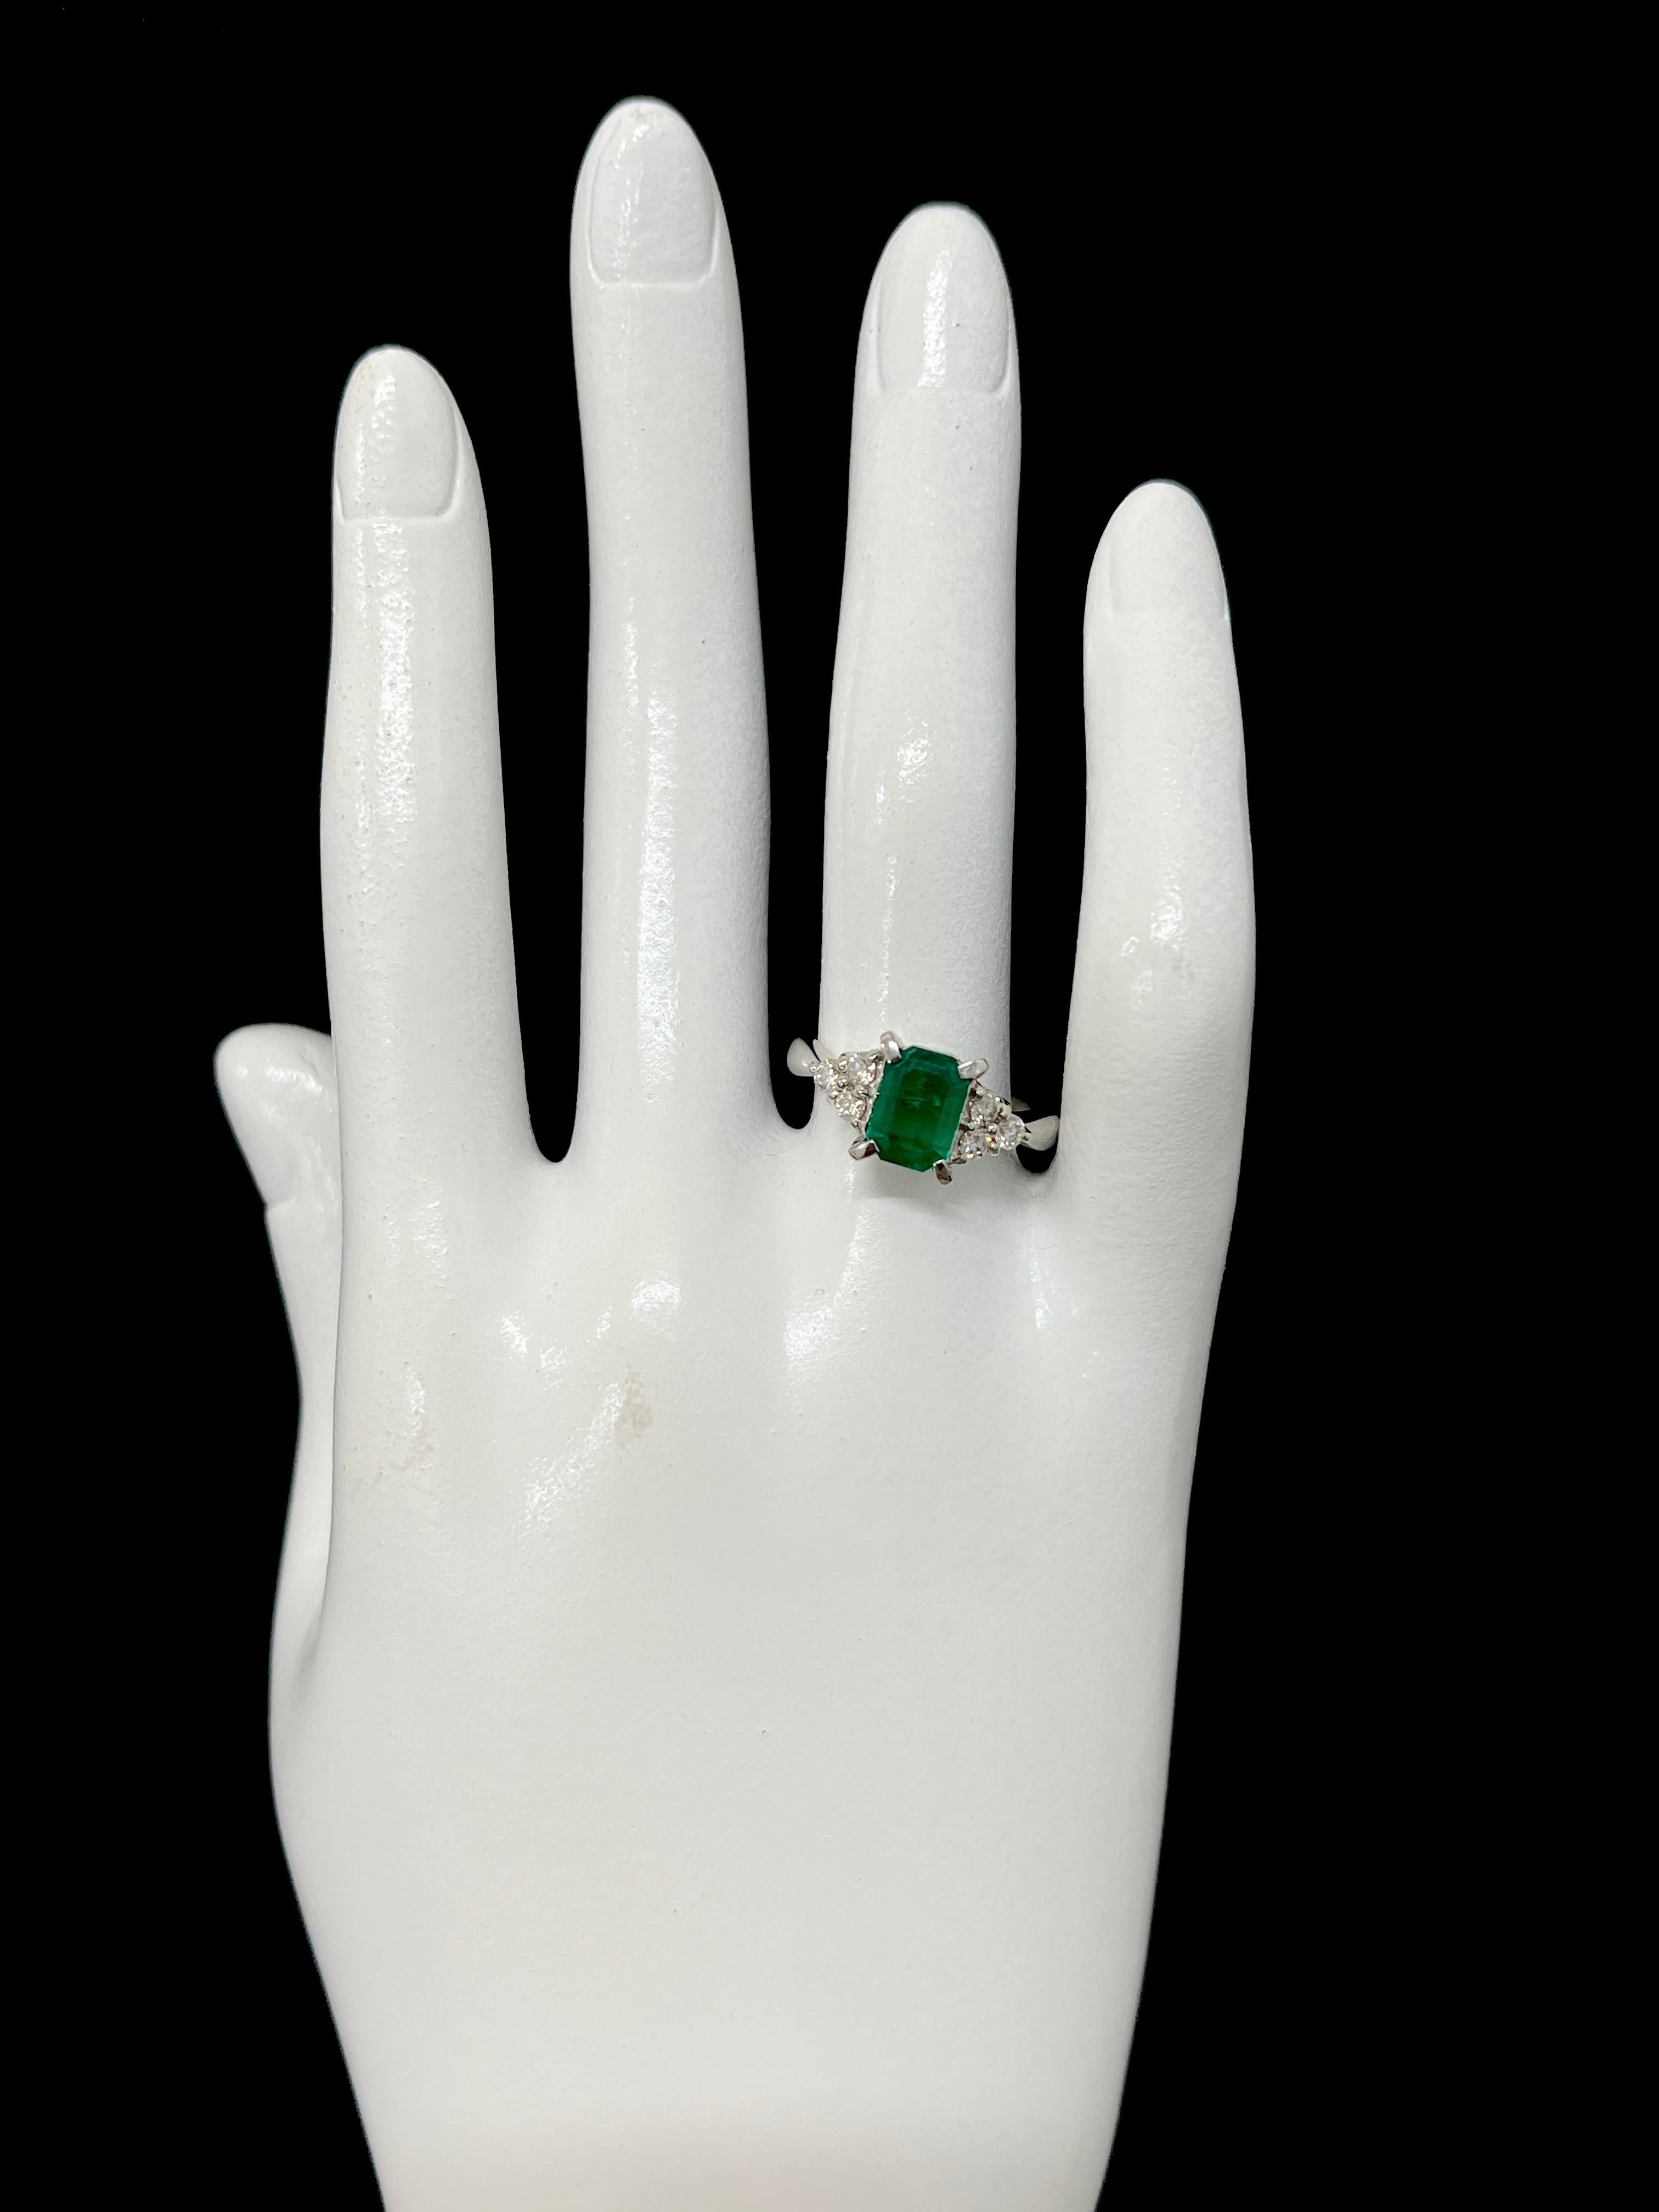 1.29 Carat Natural Emerald and Diamond Ring Made in Platinum 1